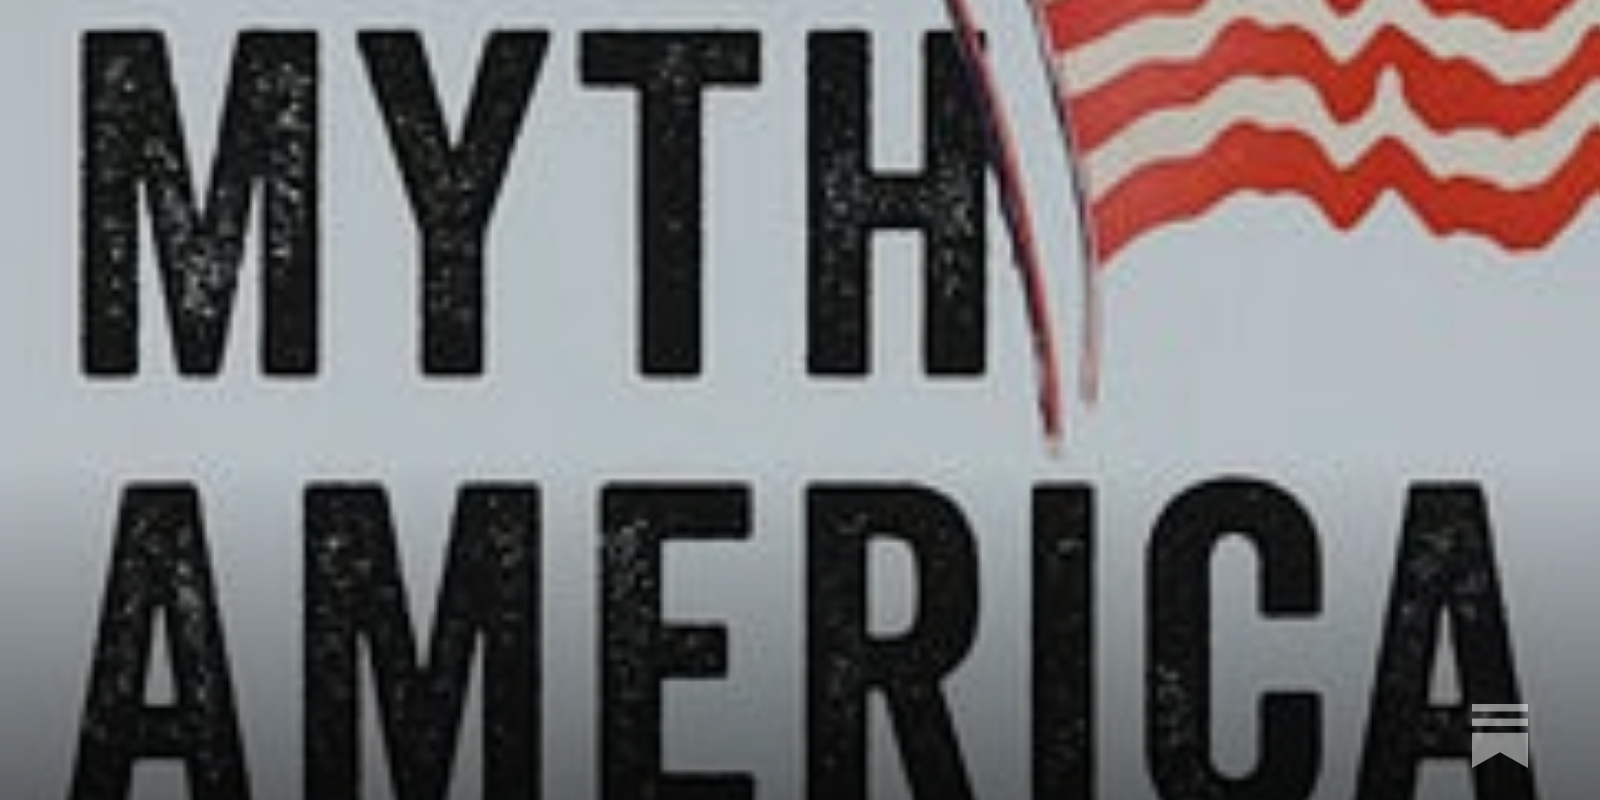 Myth America by Kevin M. Kruse